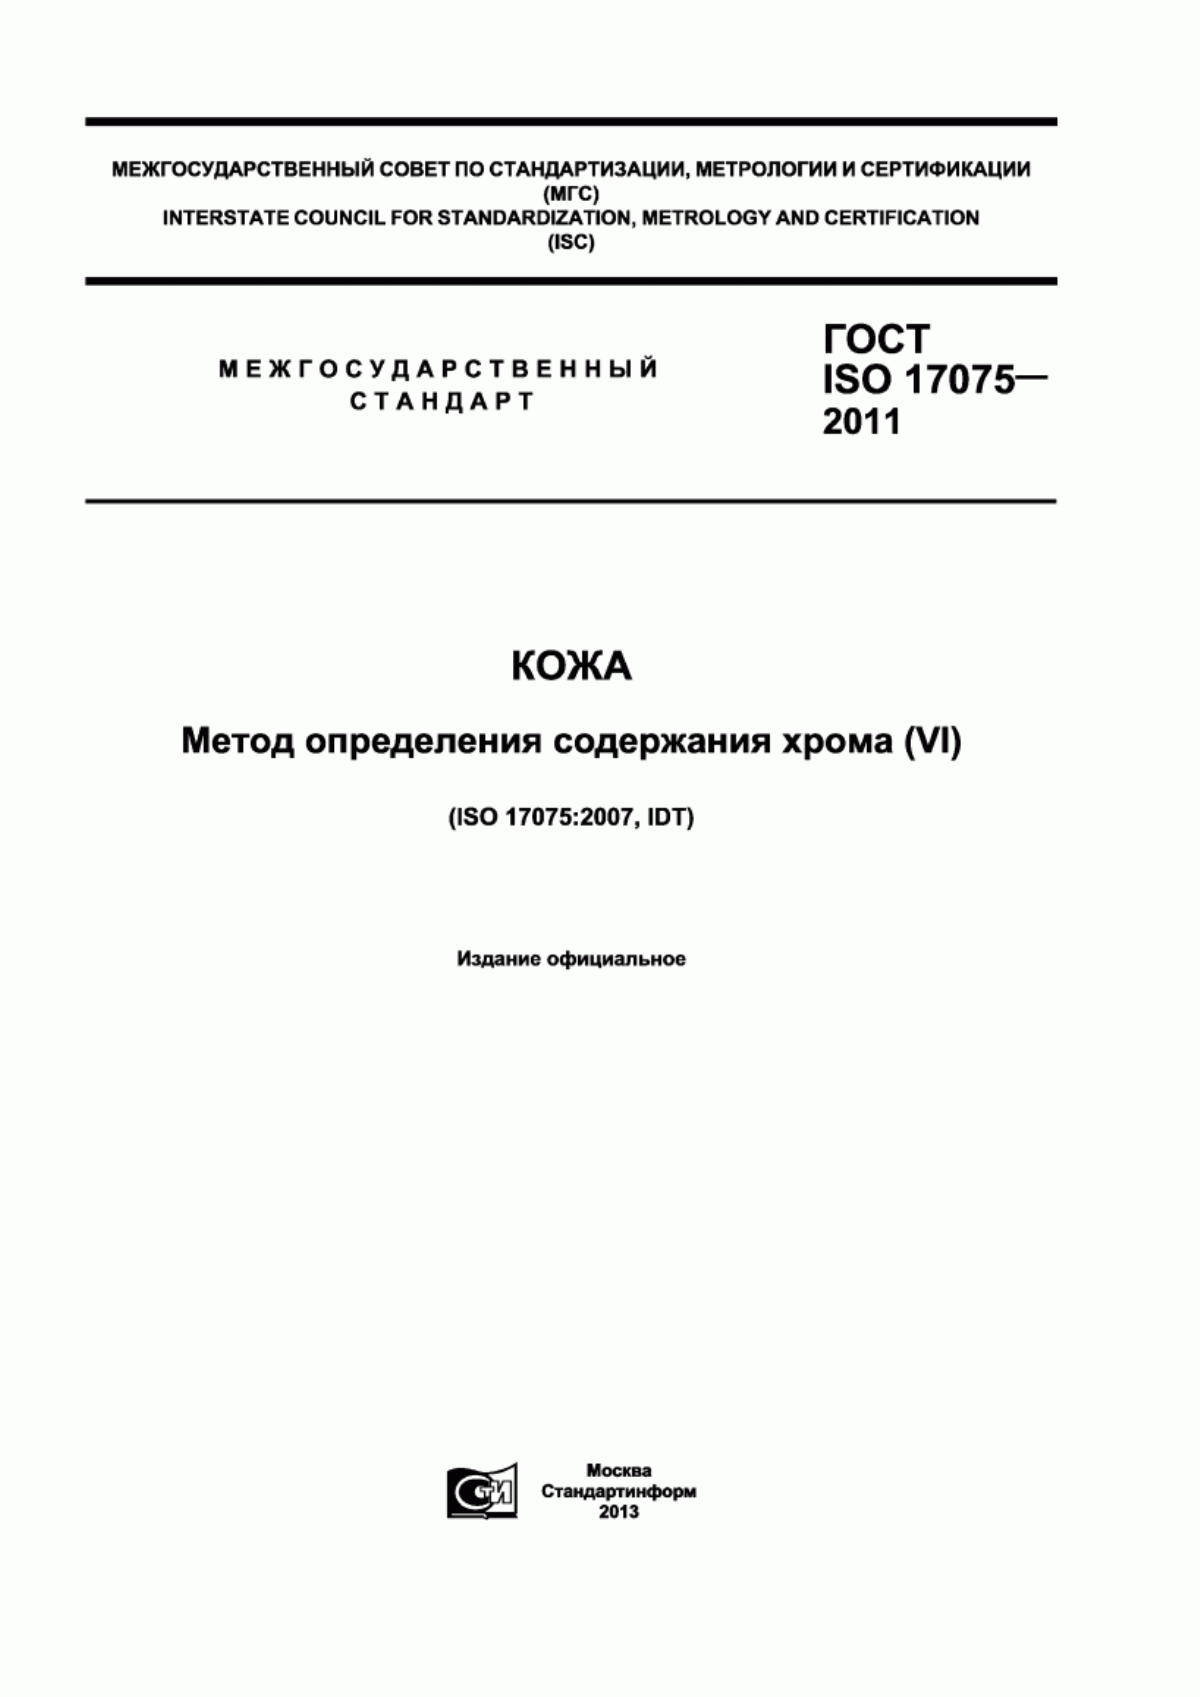 ГОСТ ISO 17075-2011 Кожа. Метод определения содержания хрома (VI)